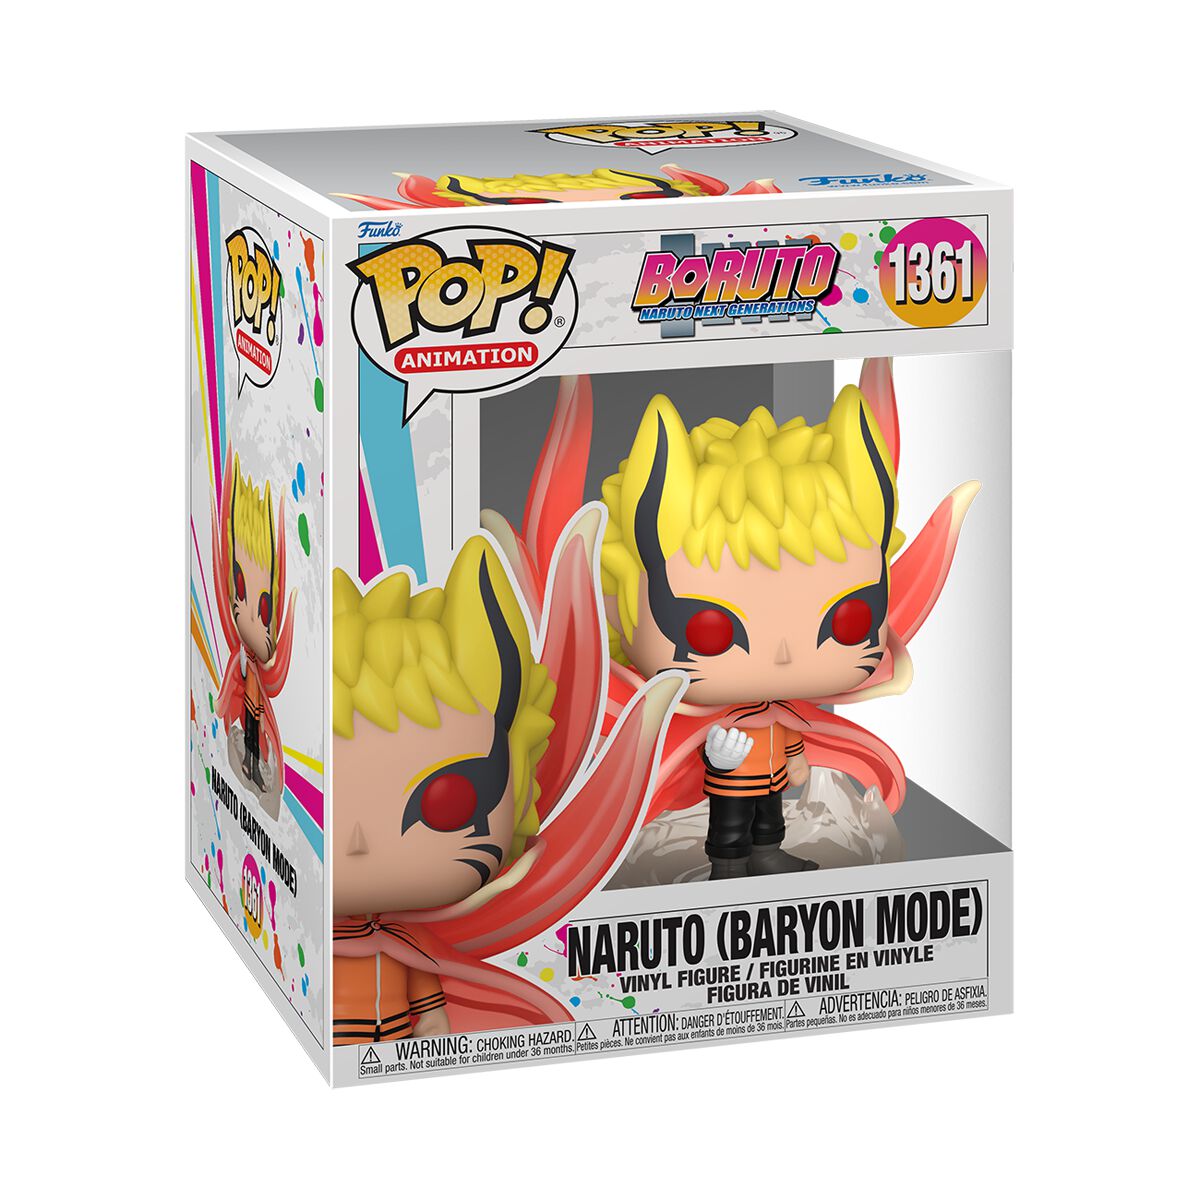 Naruto (Baryon Mode) (Pop! Super) vinylfigur nr 1361